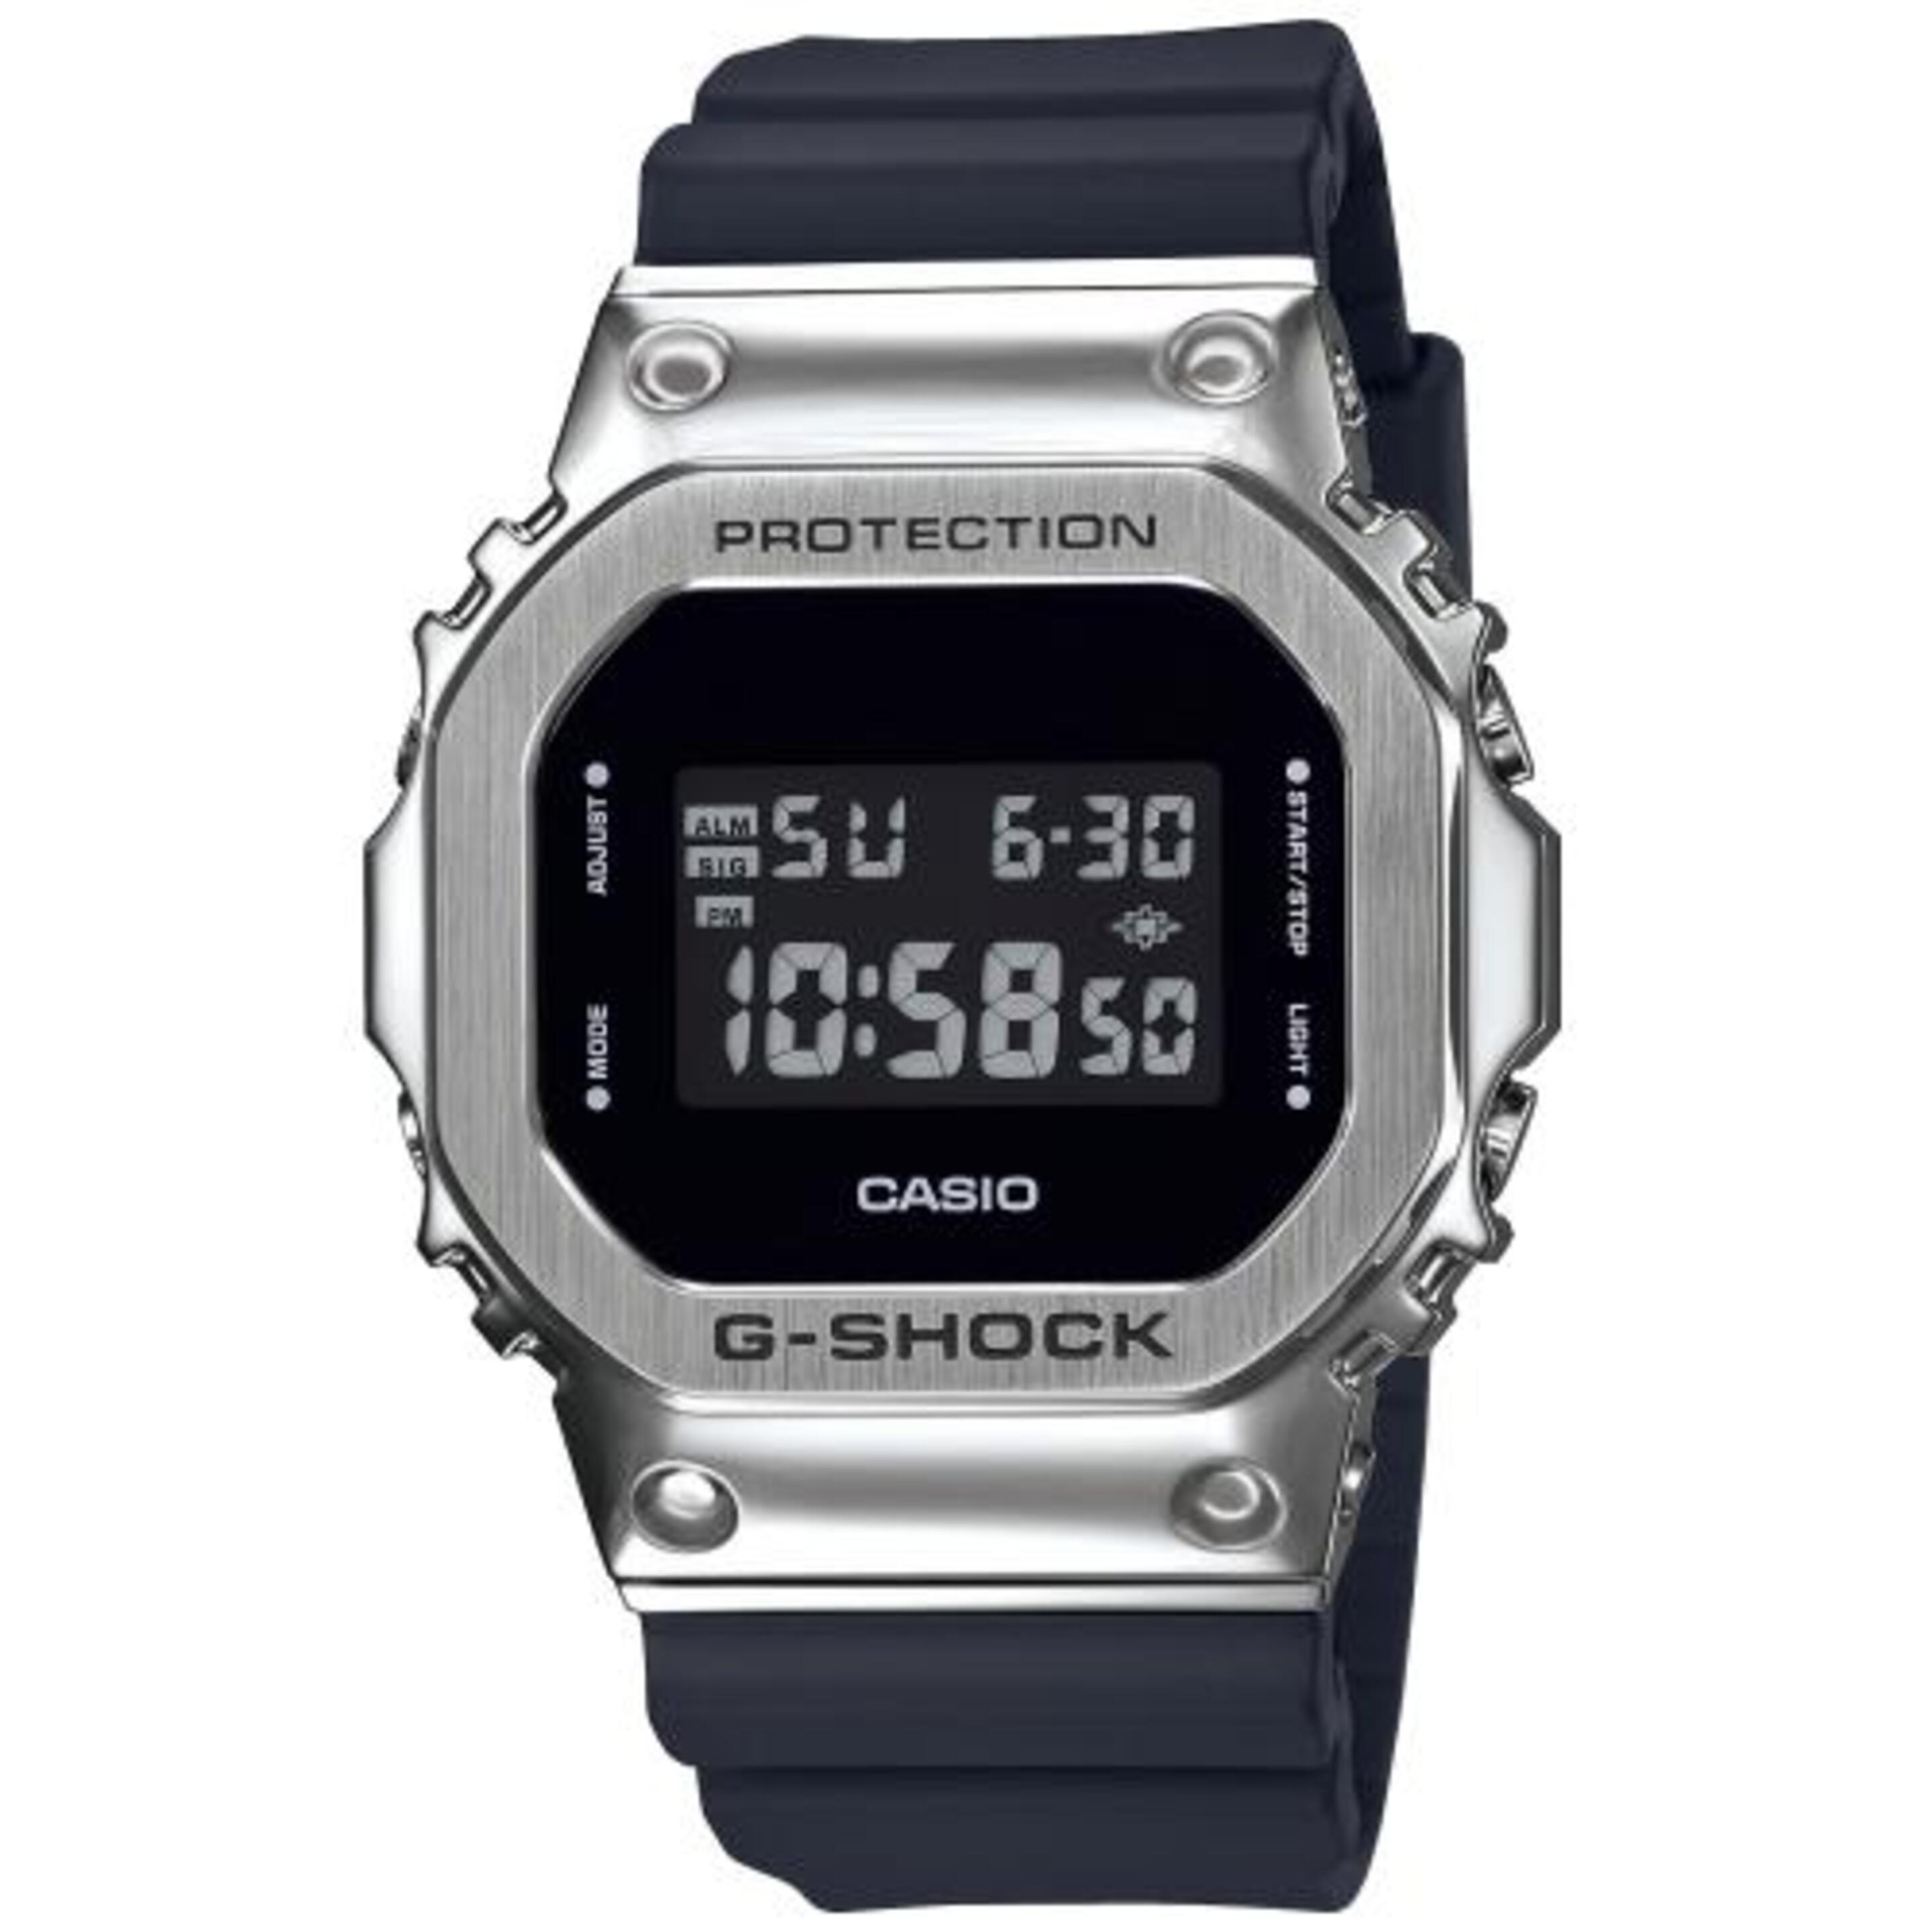 Reloj G-shock Steel Gm-5600-1er - negro - 